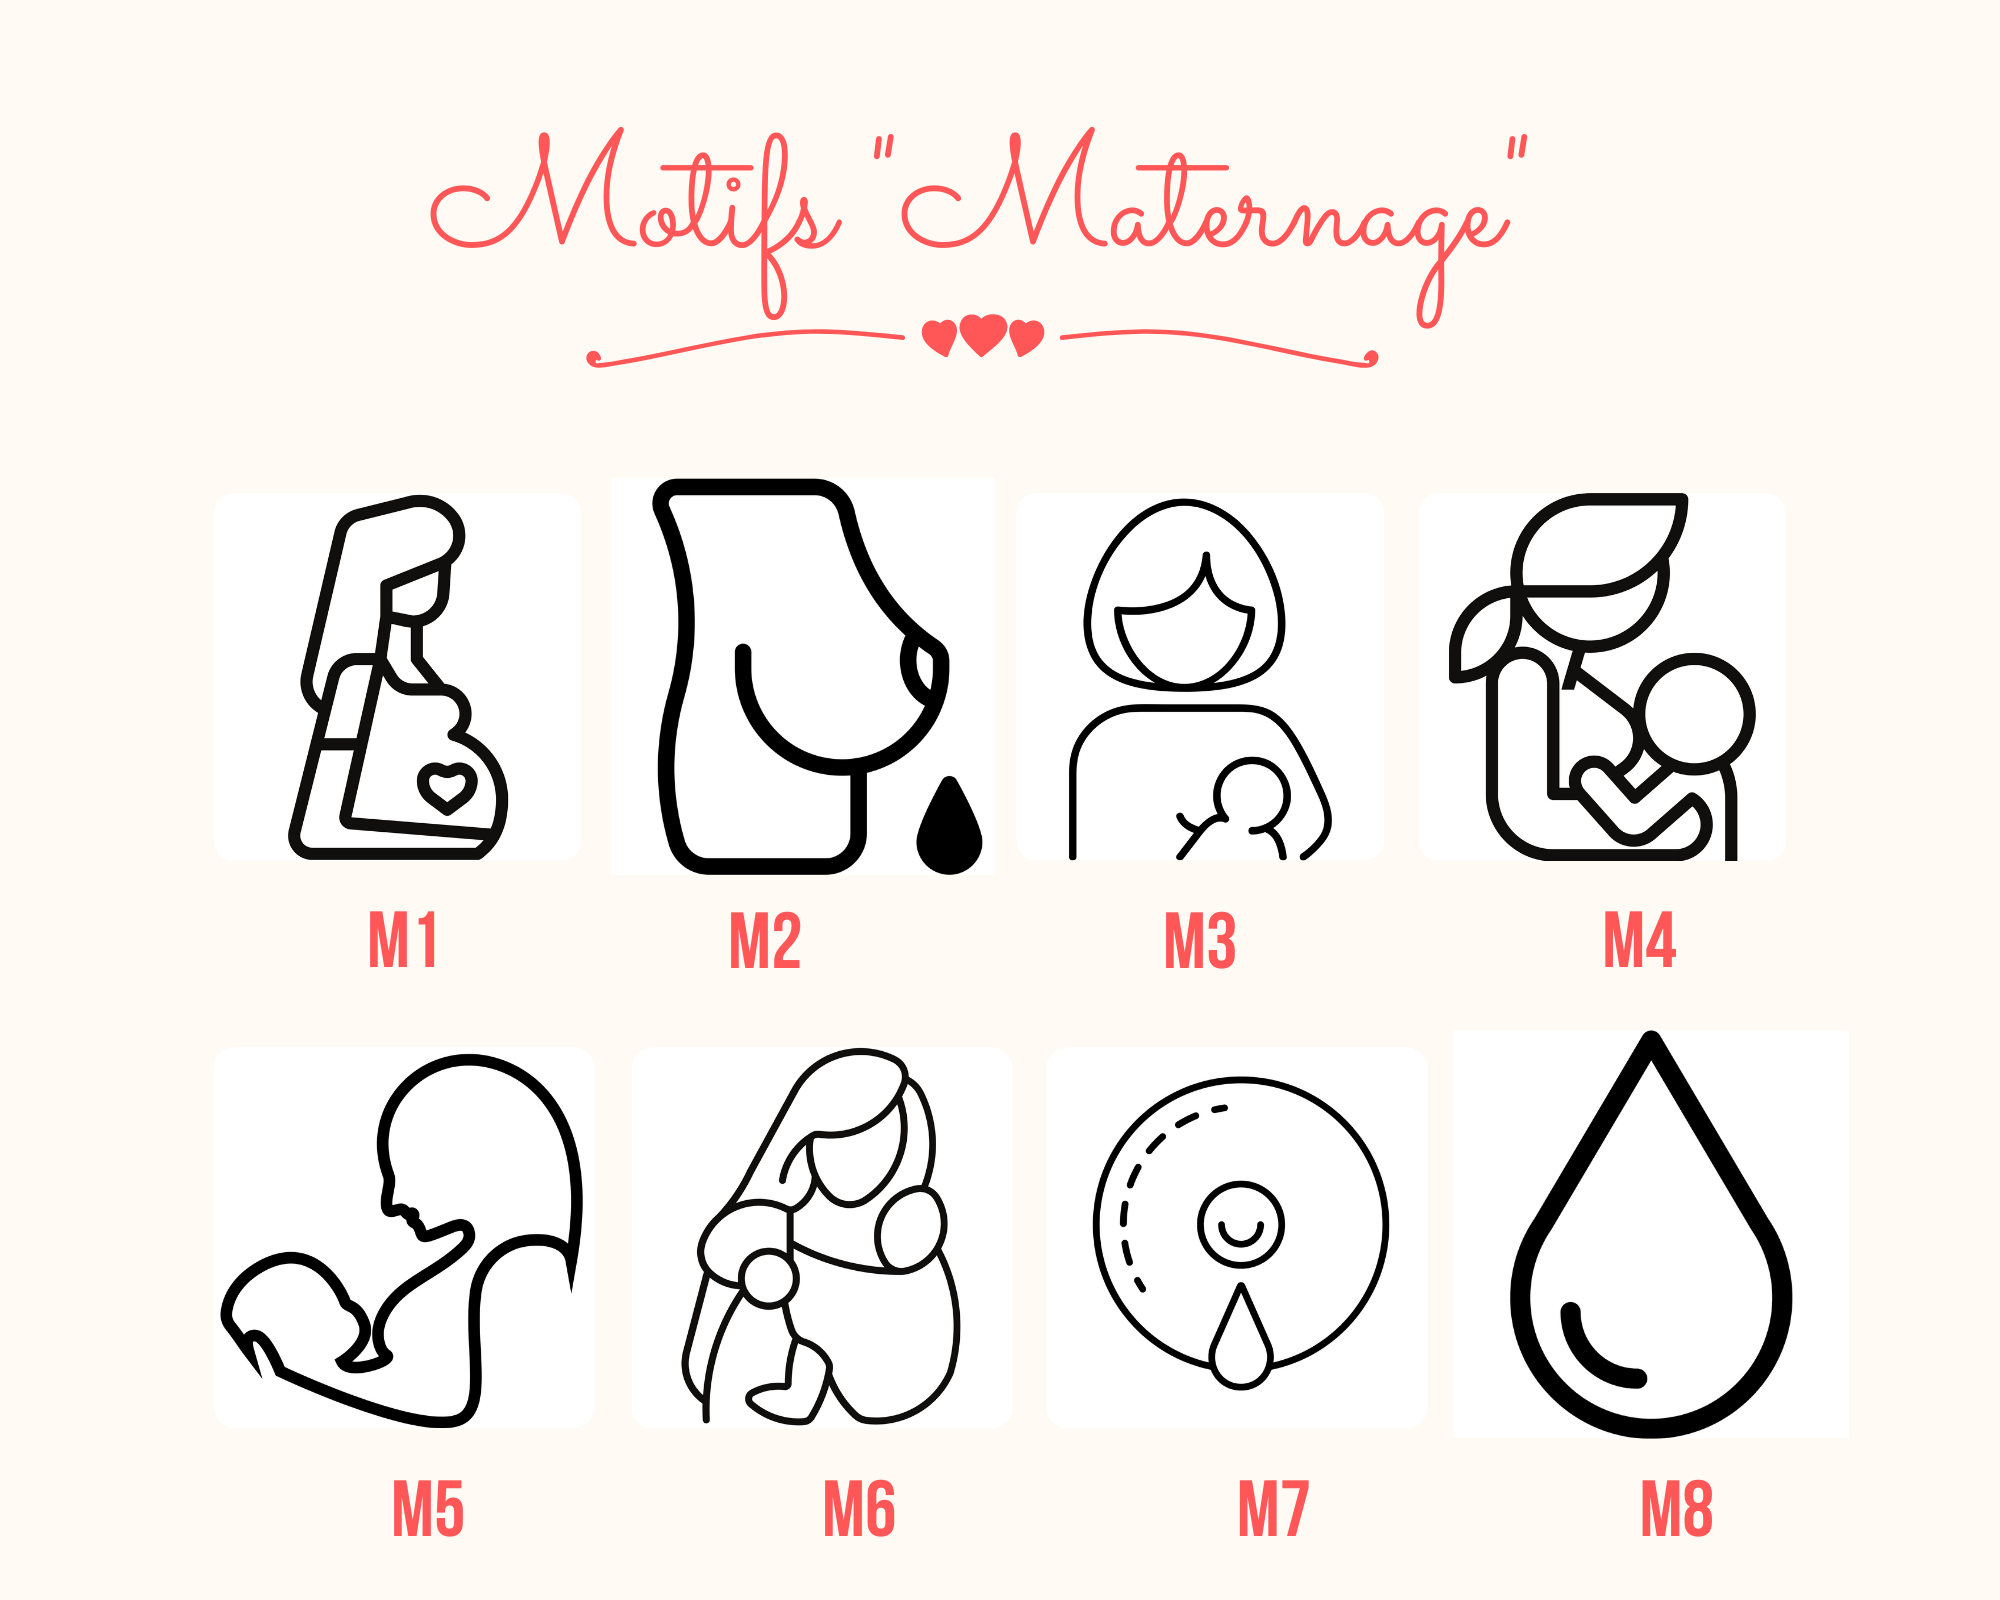 Motifs Maternage